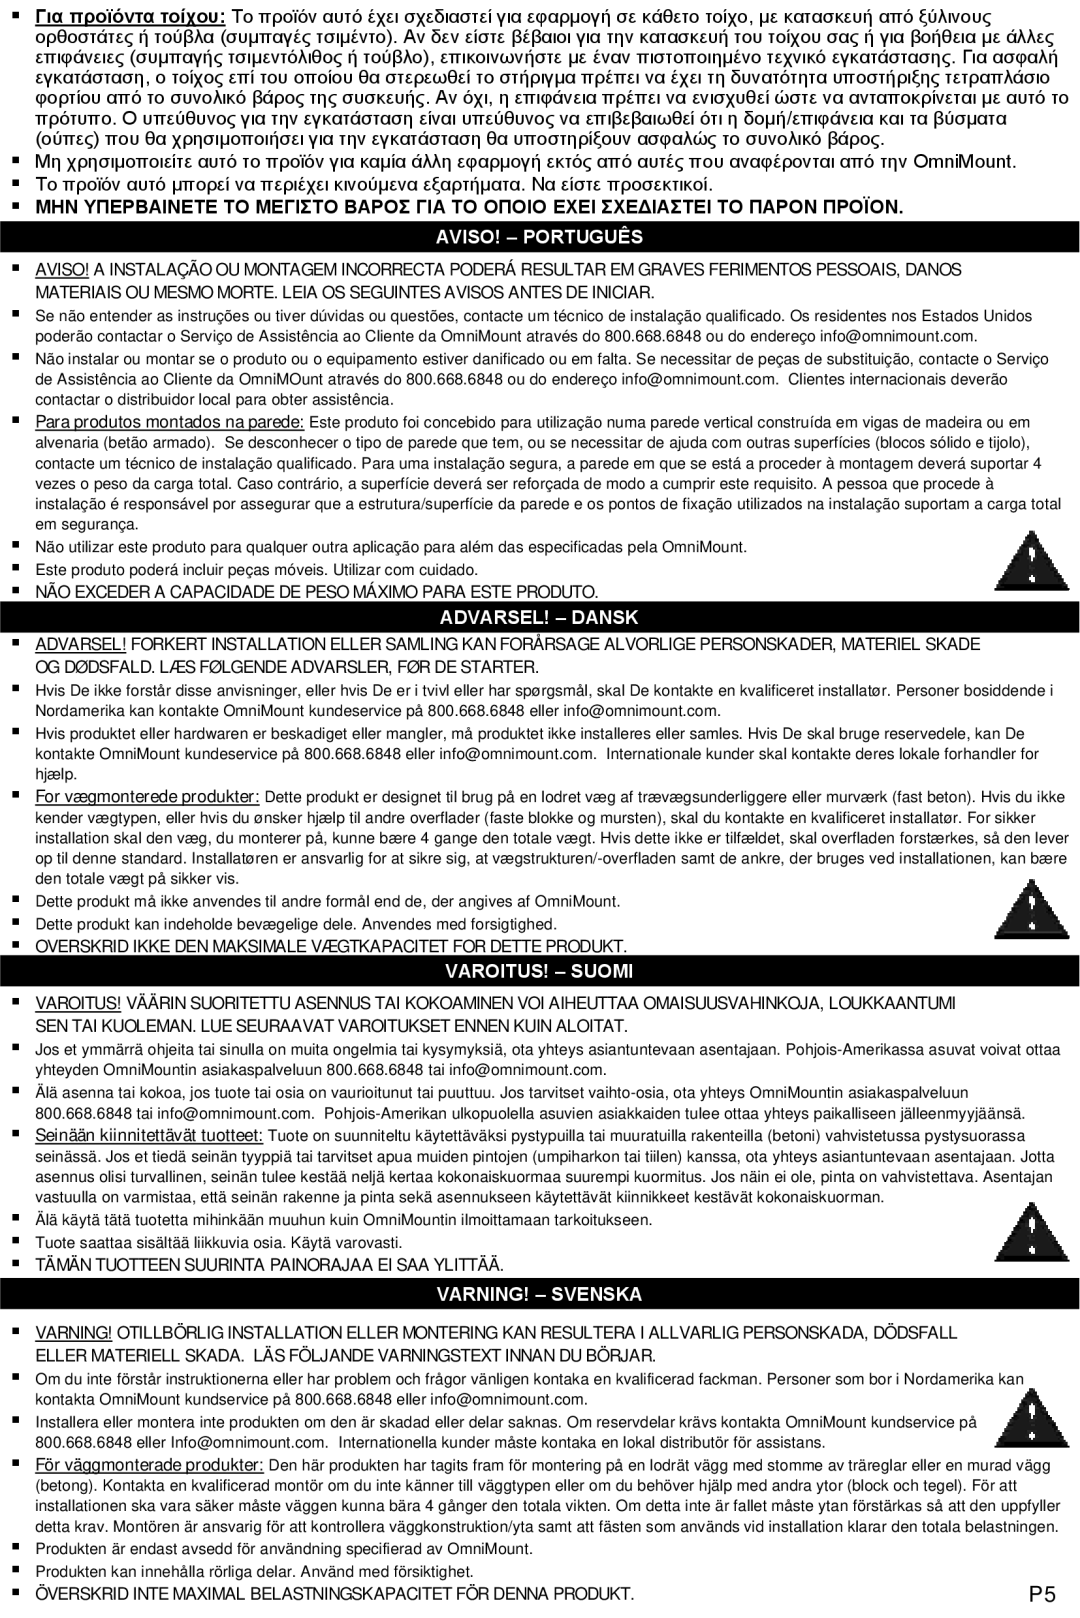 Omnimount MWF16 instruction manual Aviso! - Português, Advarsel! - Dansk, Varoitus! - Suomi, Varning! - Svenska 